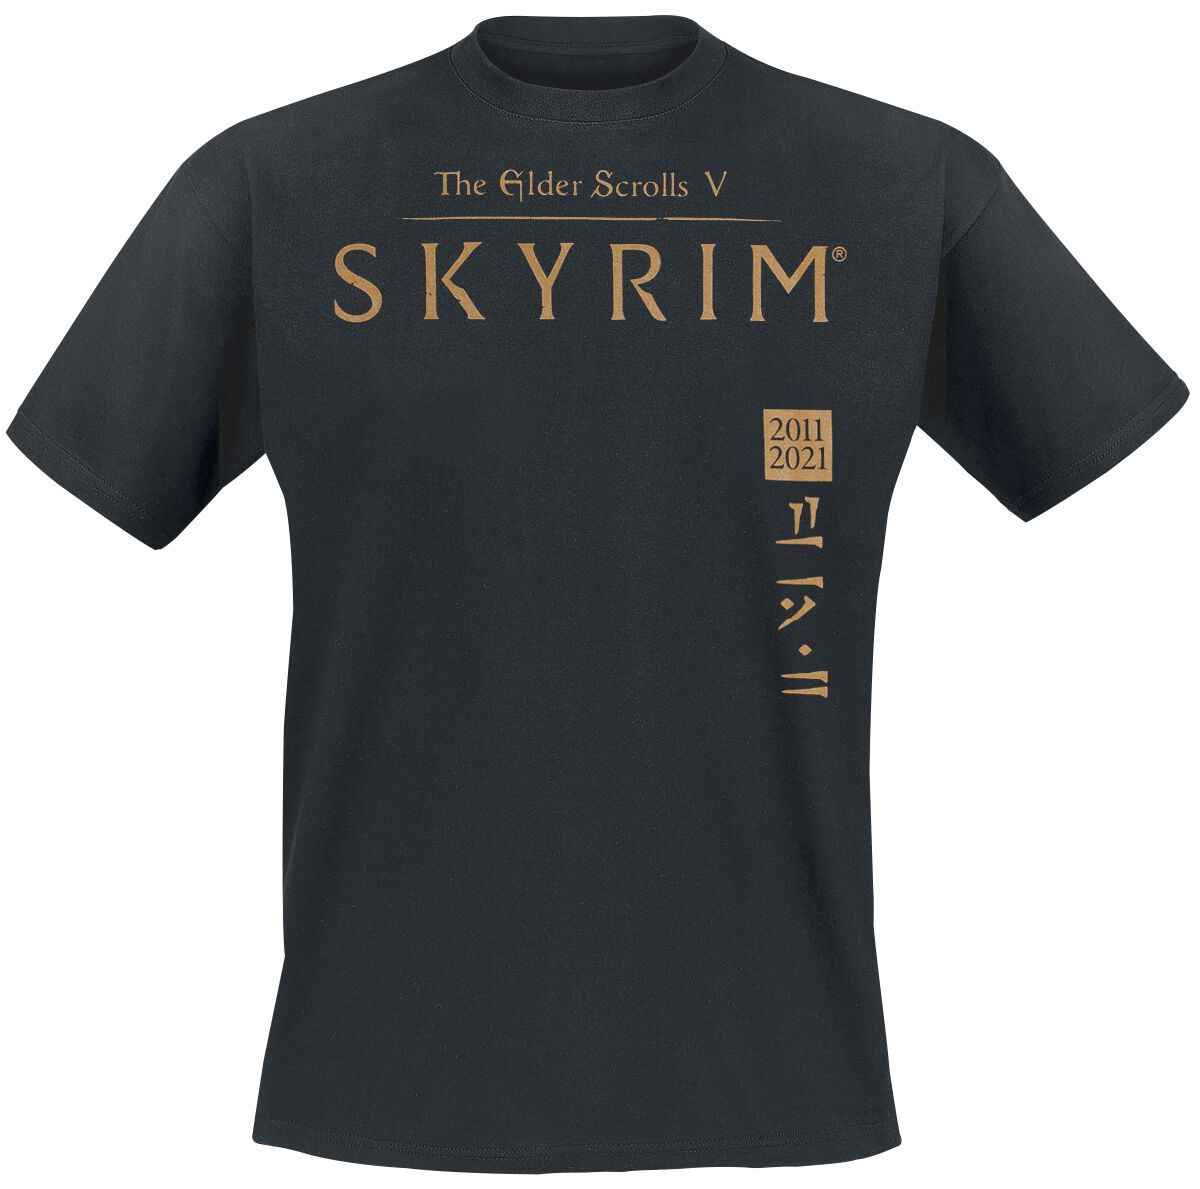 Skyrim The Elder Scrolls V - 10th Anniversary T-Shirt black